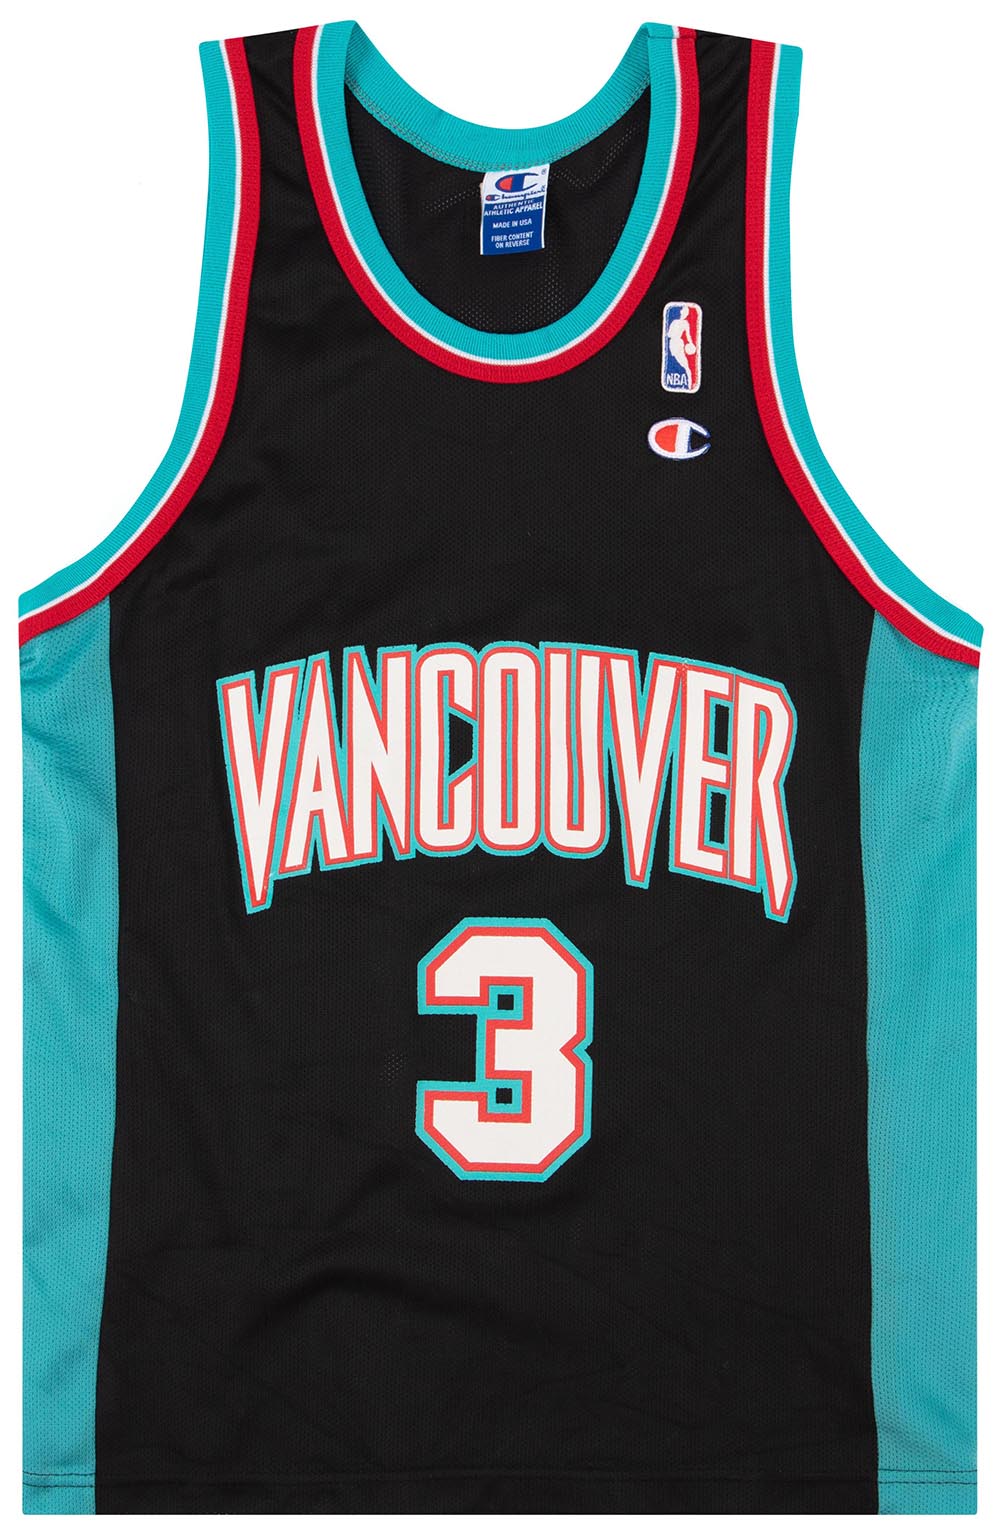 Vintage Champion Vancouver Grizzlies Abdur-Rahim Jersey Size Medium